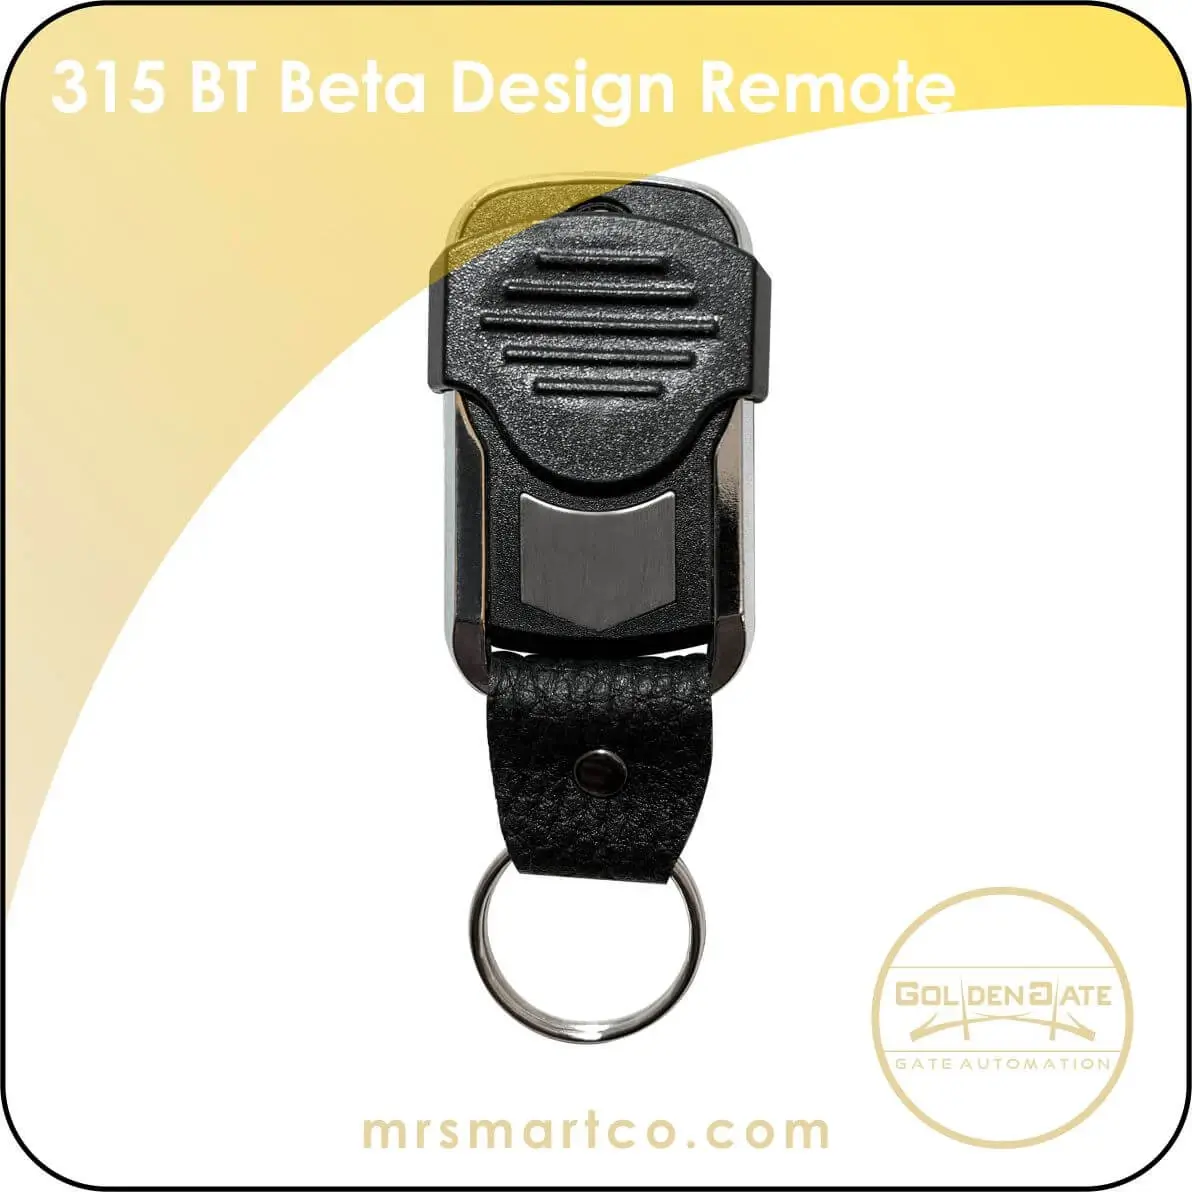 bluetooth remote 315 beta design